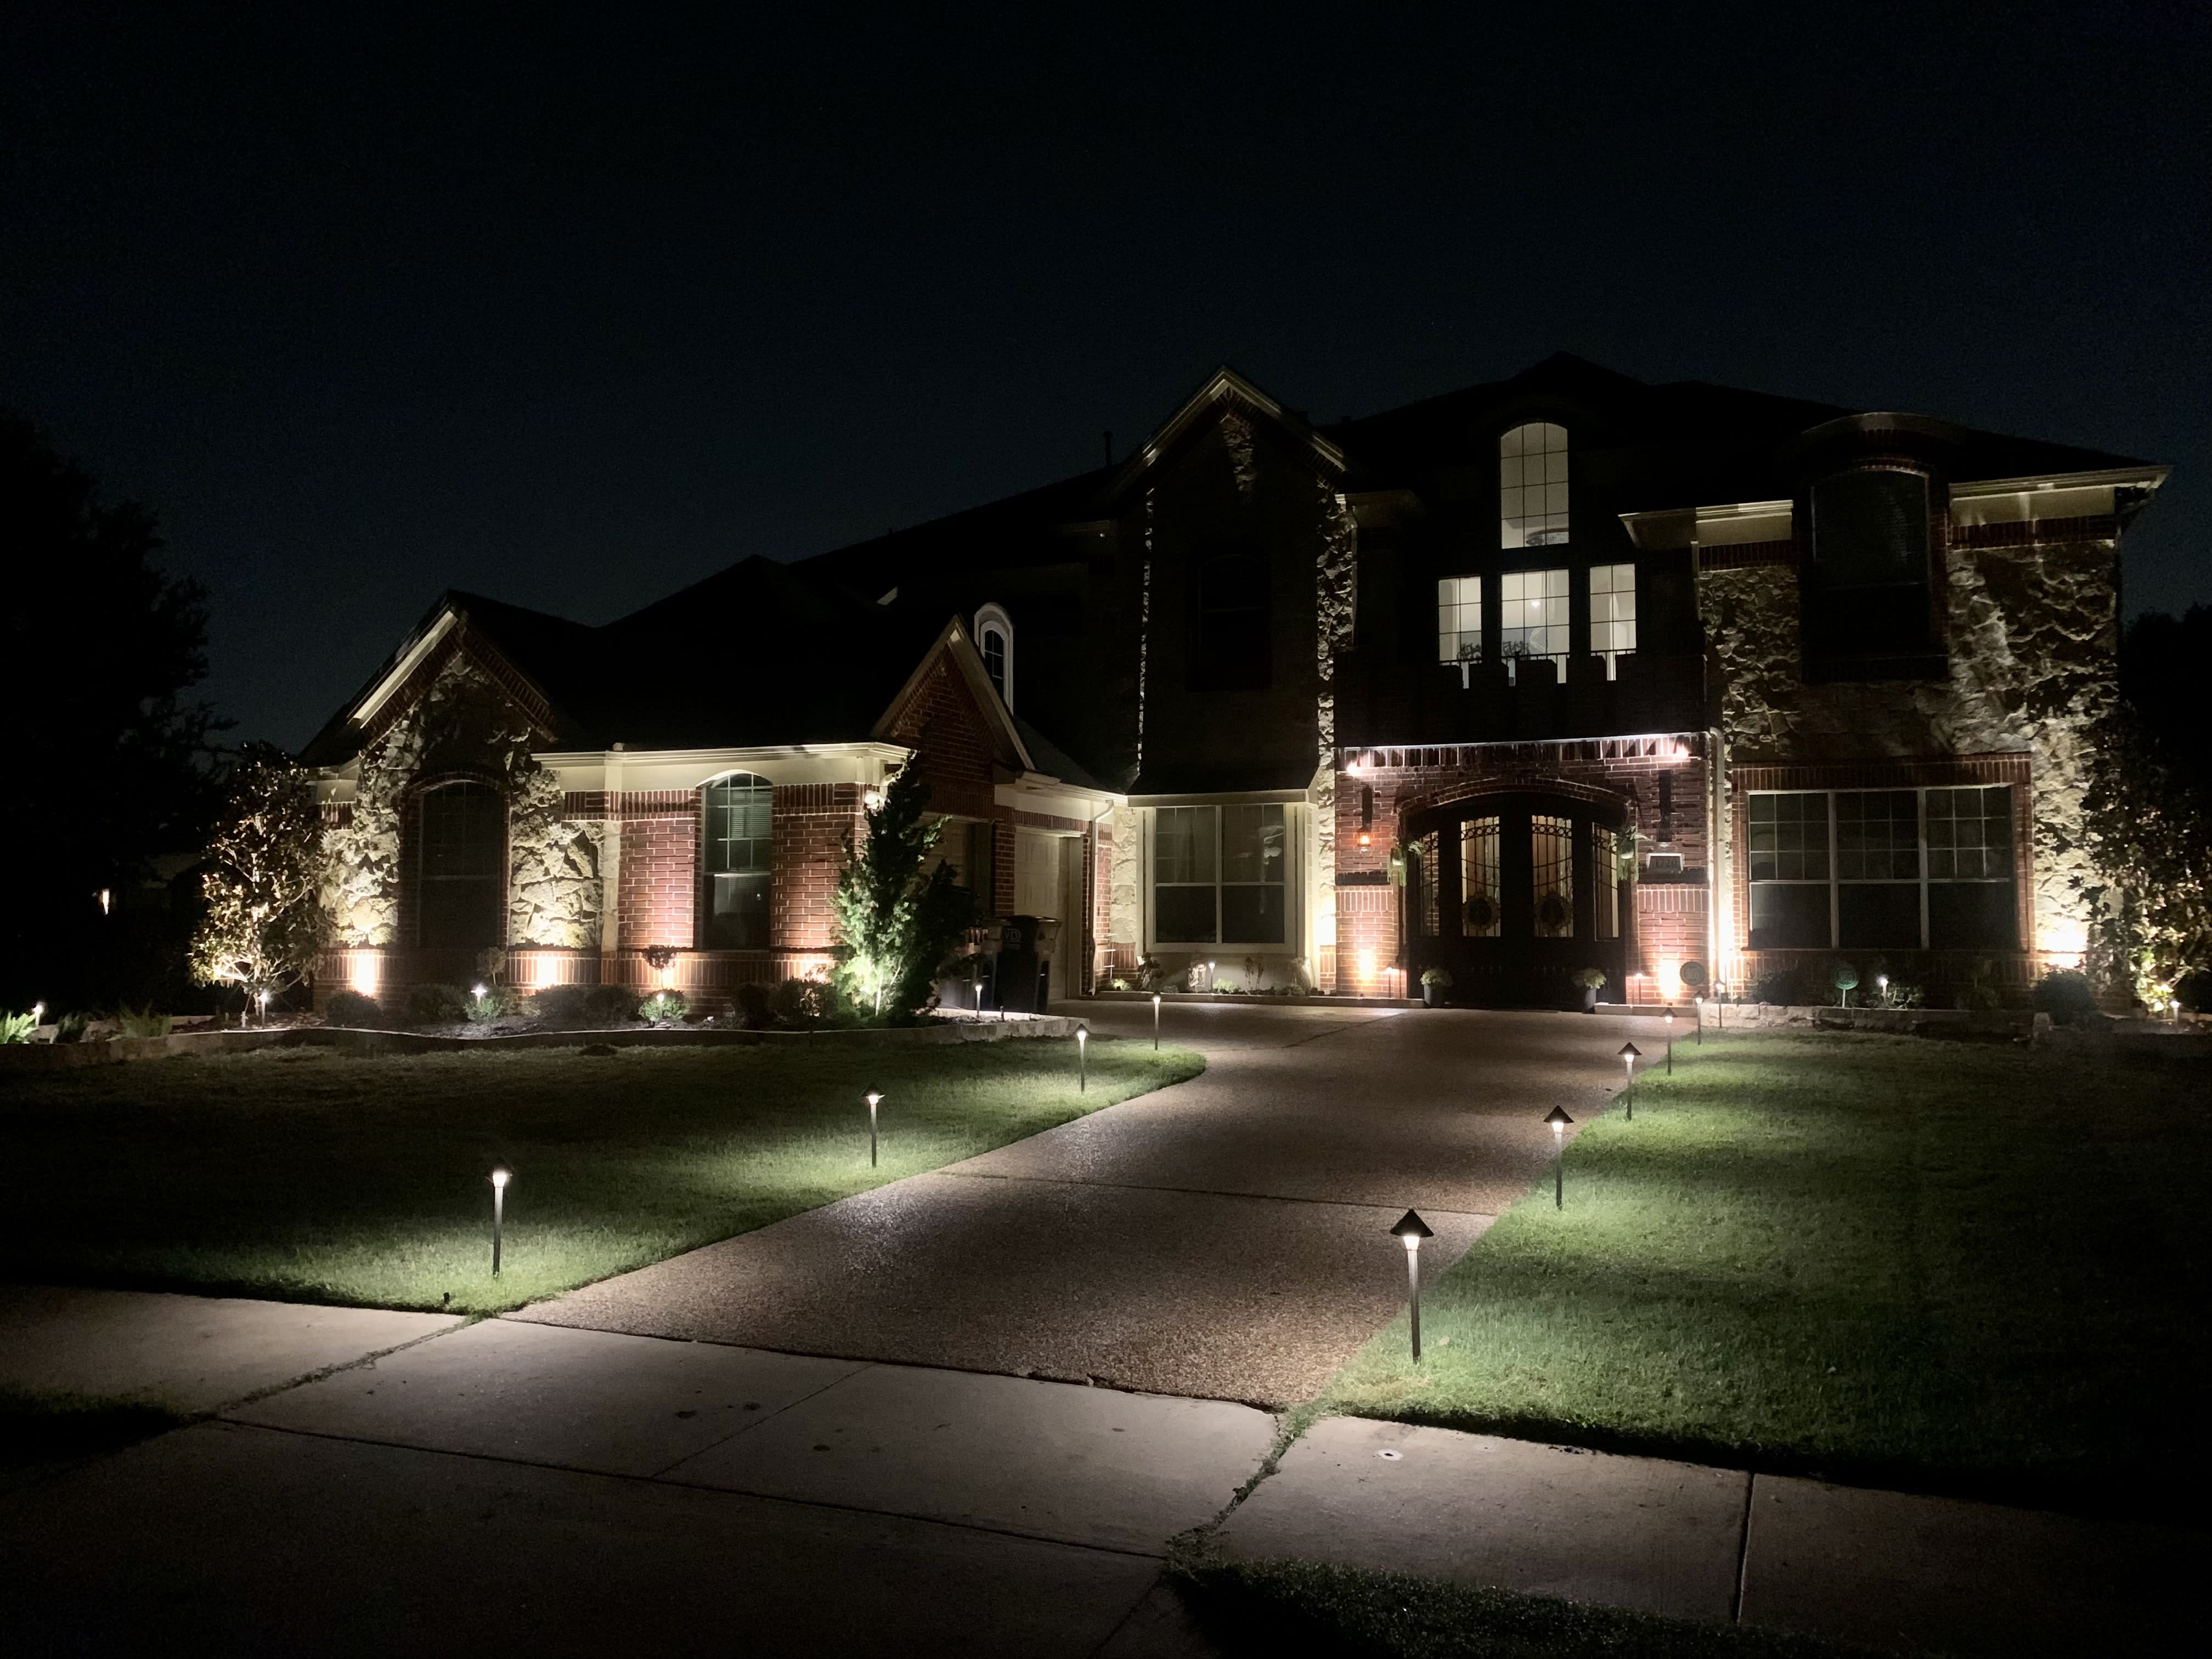 Bernardy Lighting | Landscape Lighting Services in Lewisville